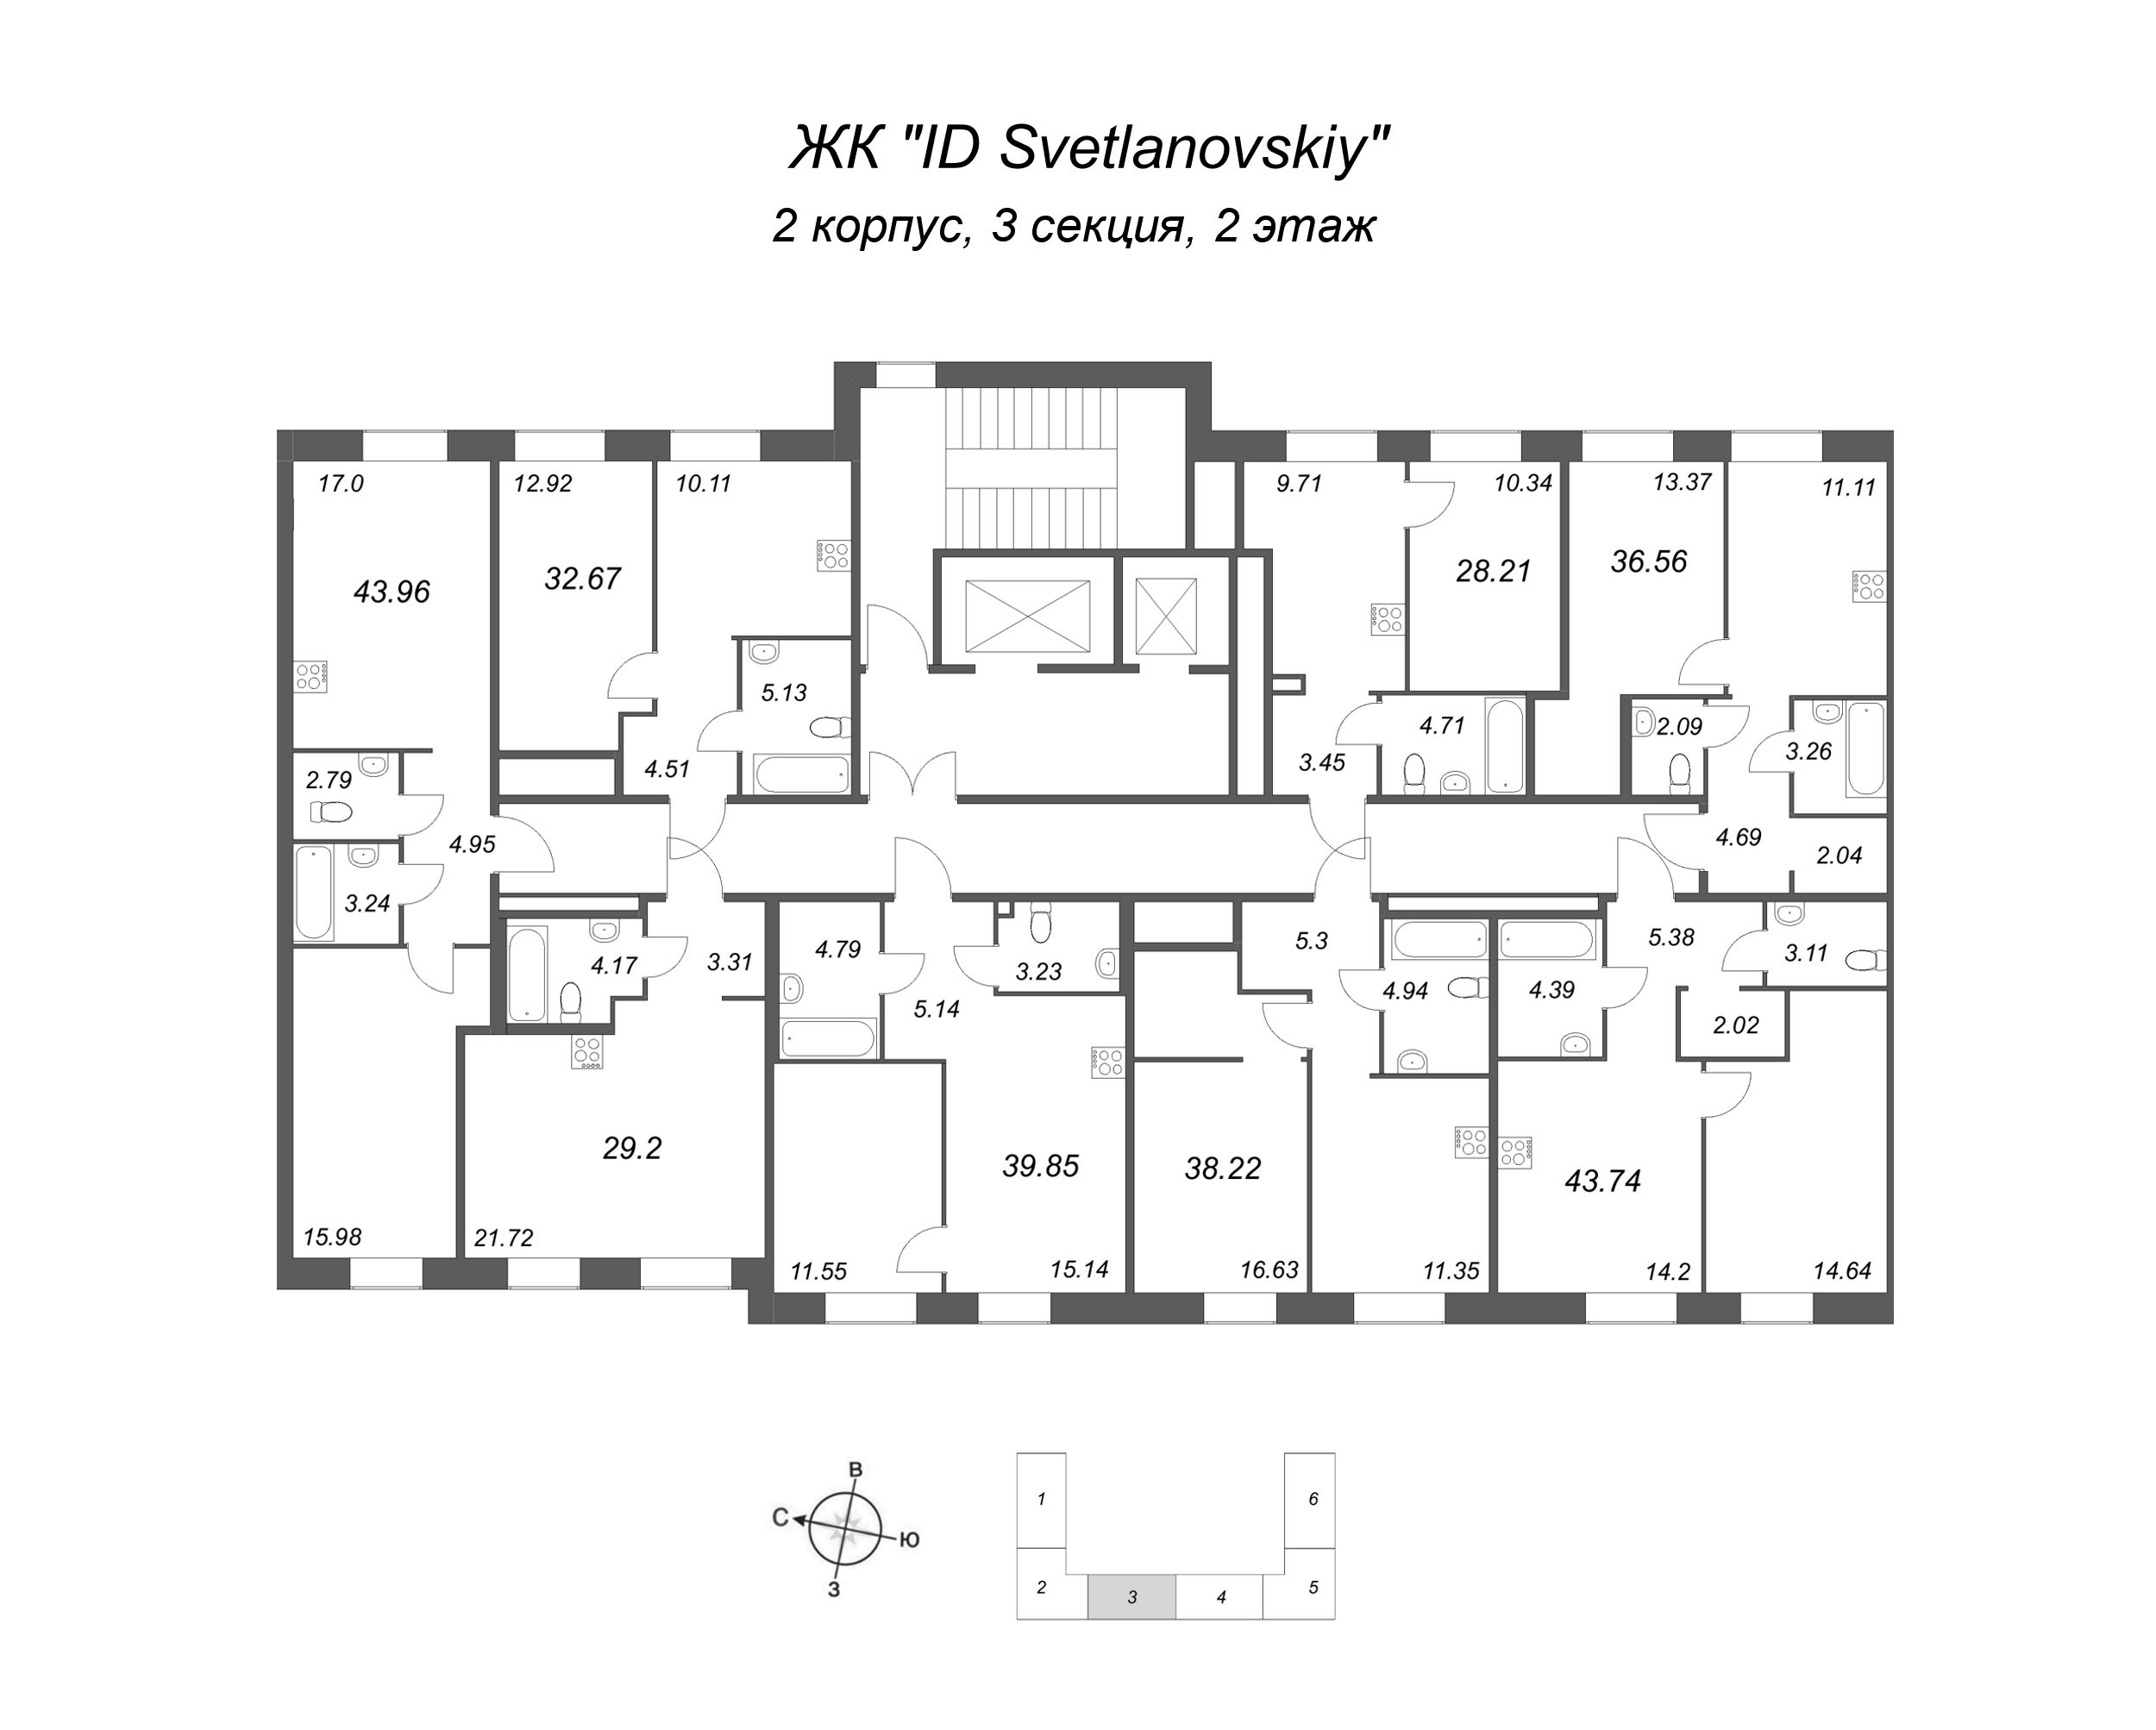 2-комнатная (Евро) квартира, 39.85 м² - планировка этажа